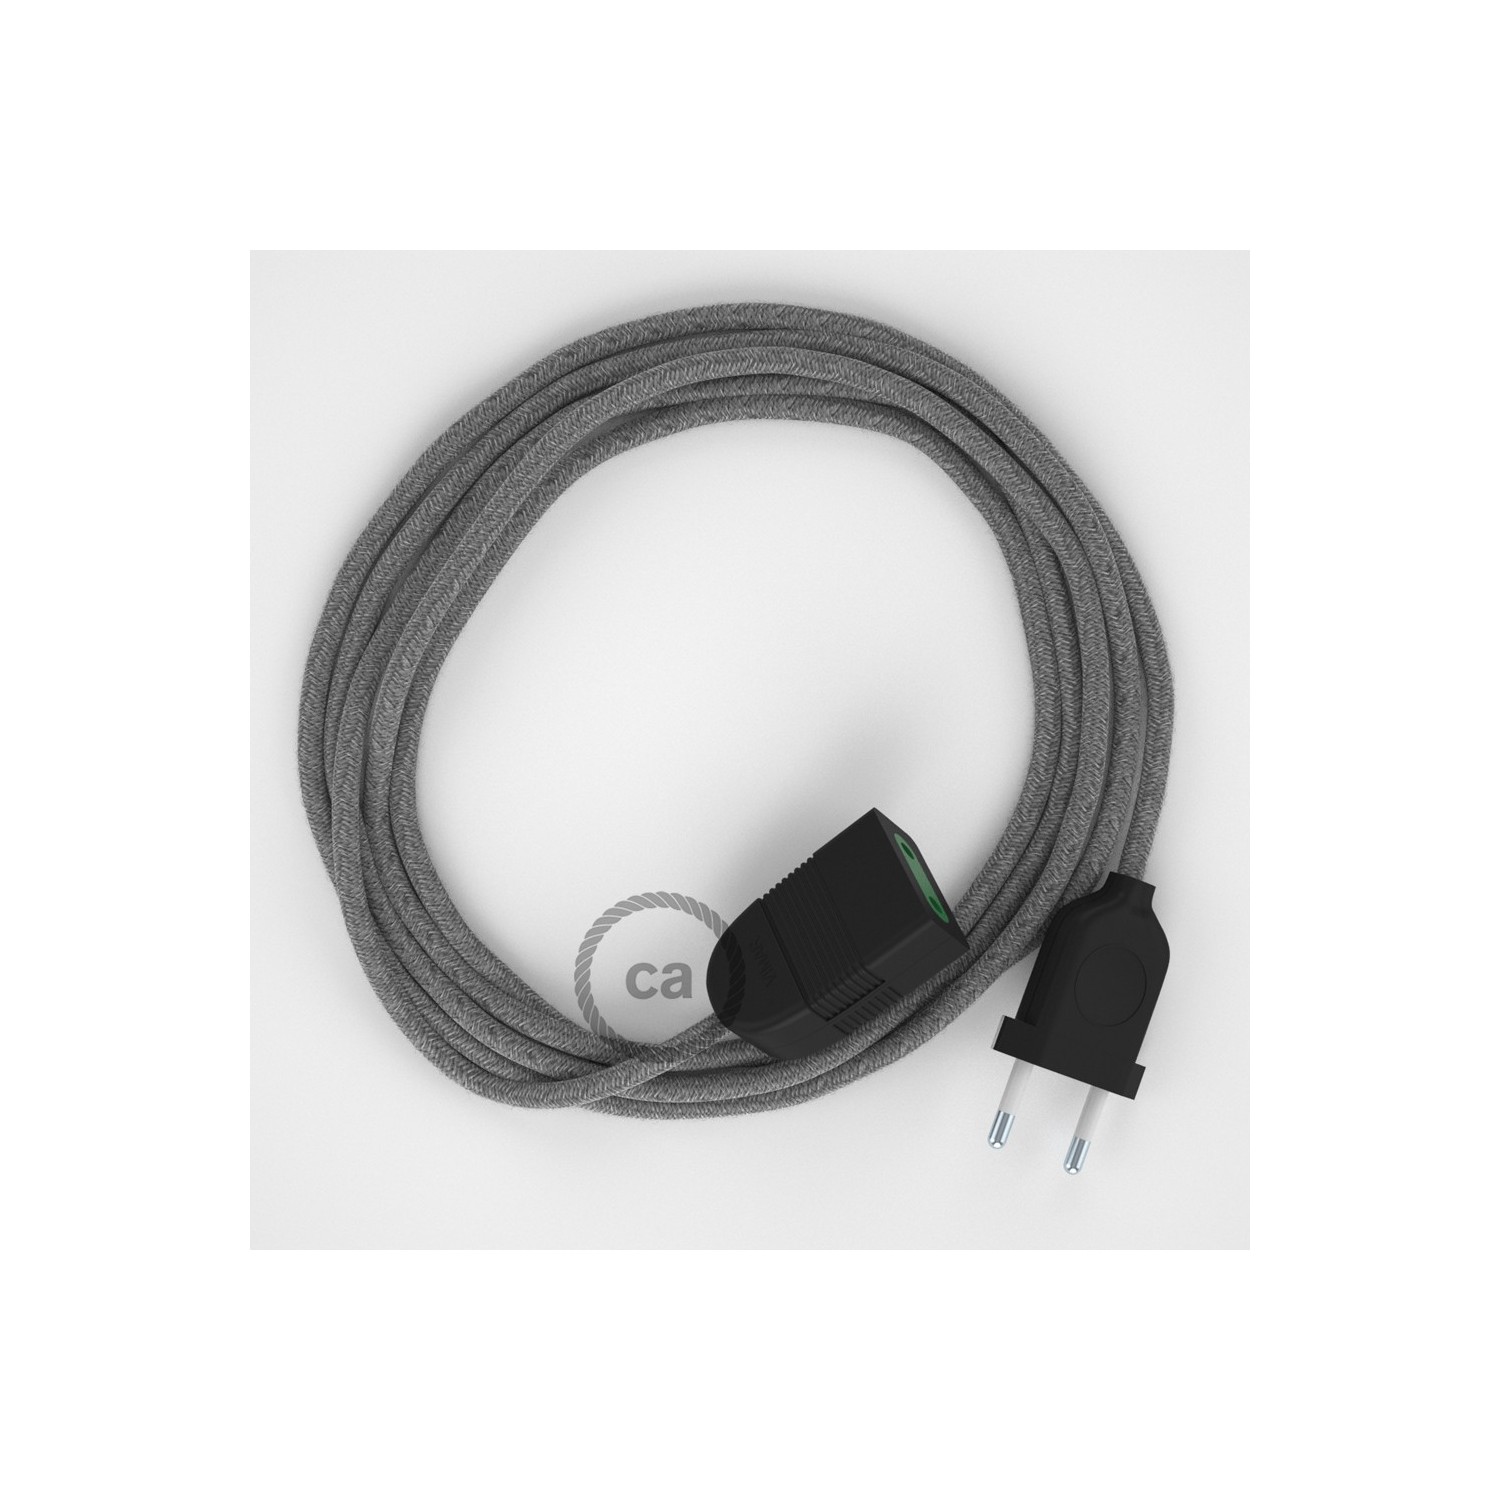 Rallonge électrique avec câble textile RN02 Lin Naturel Gris 2P 10A Made in Italy.